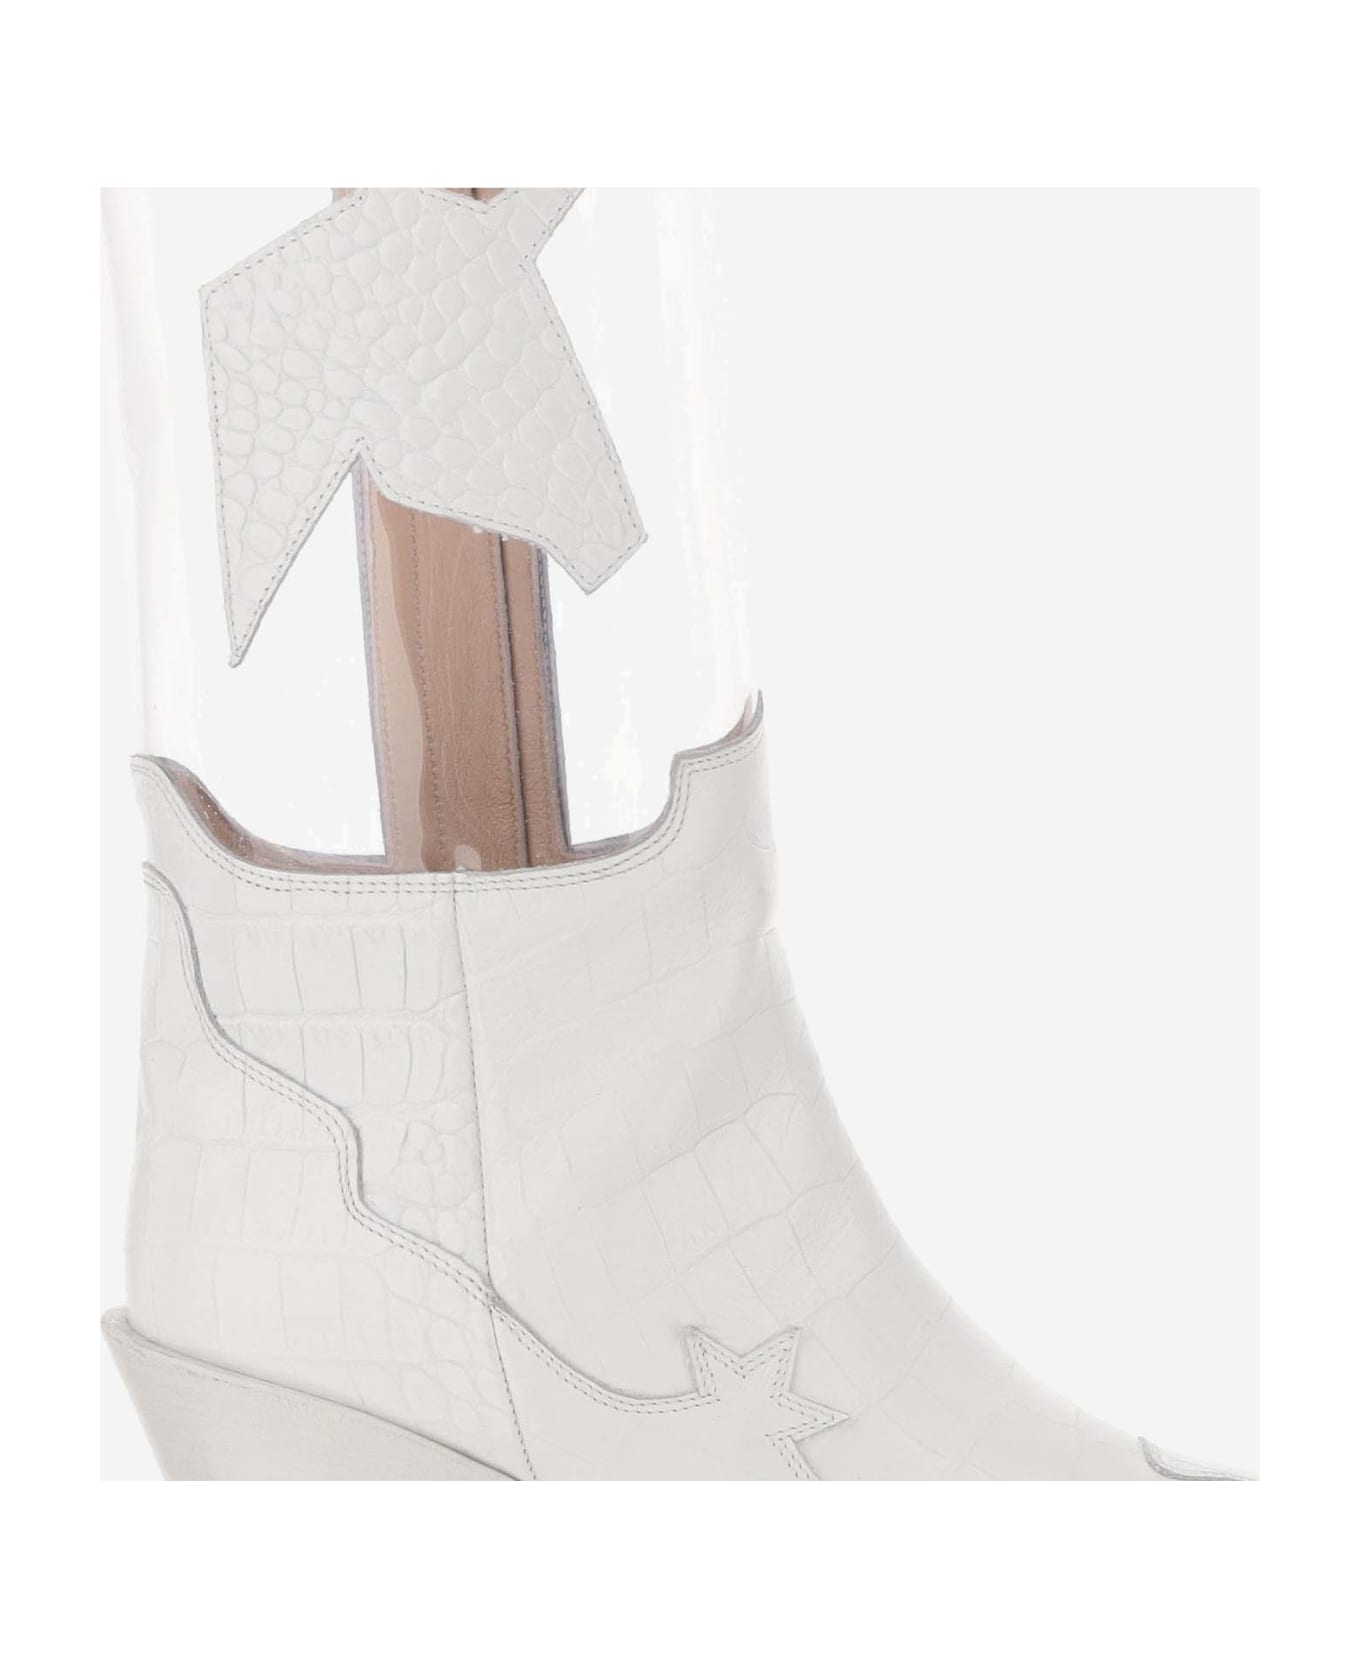 Francesca Bellavita High Cowboy Boots Amazon - White